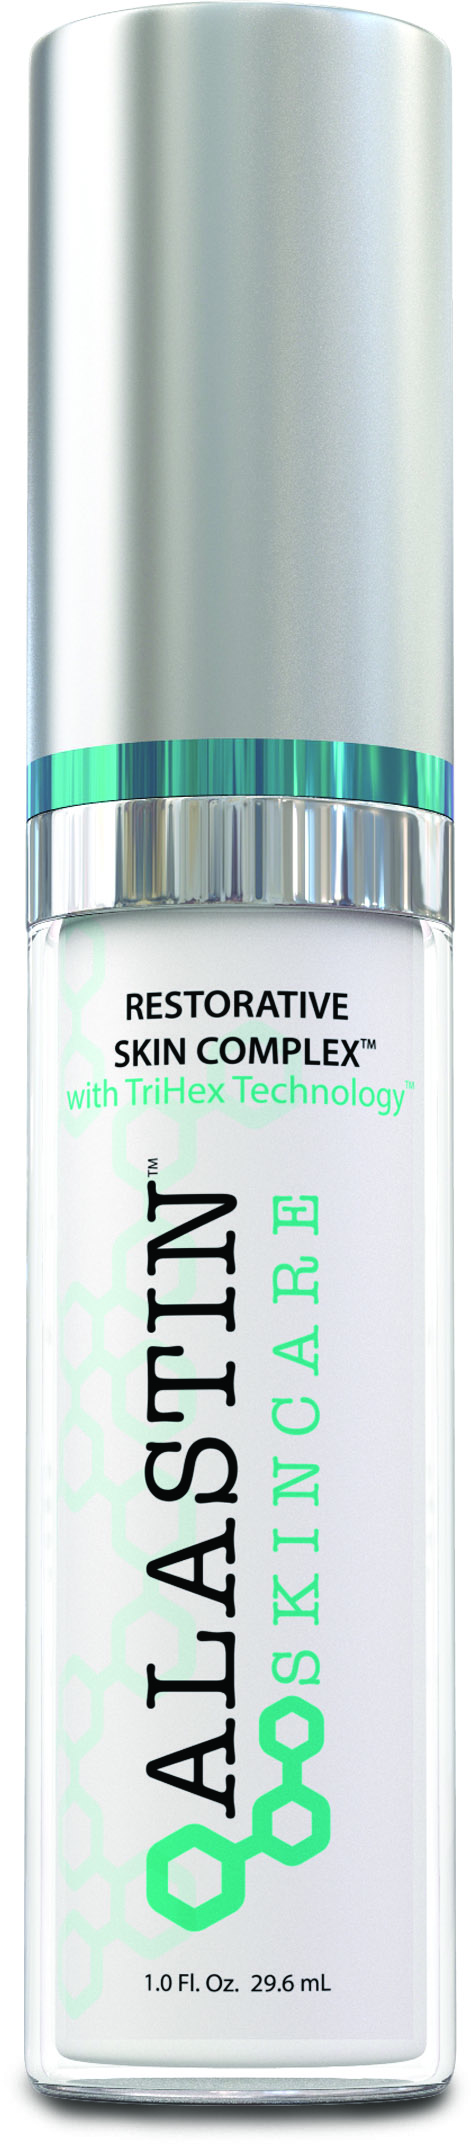 restorative skin complex™